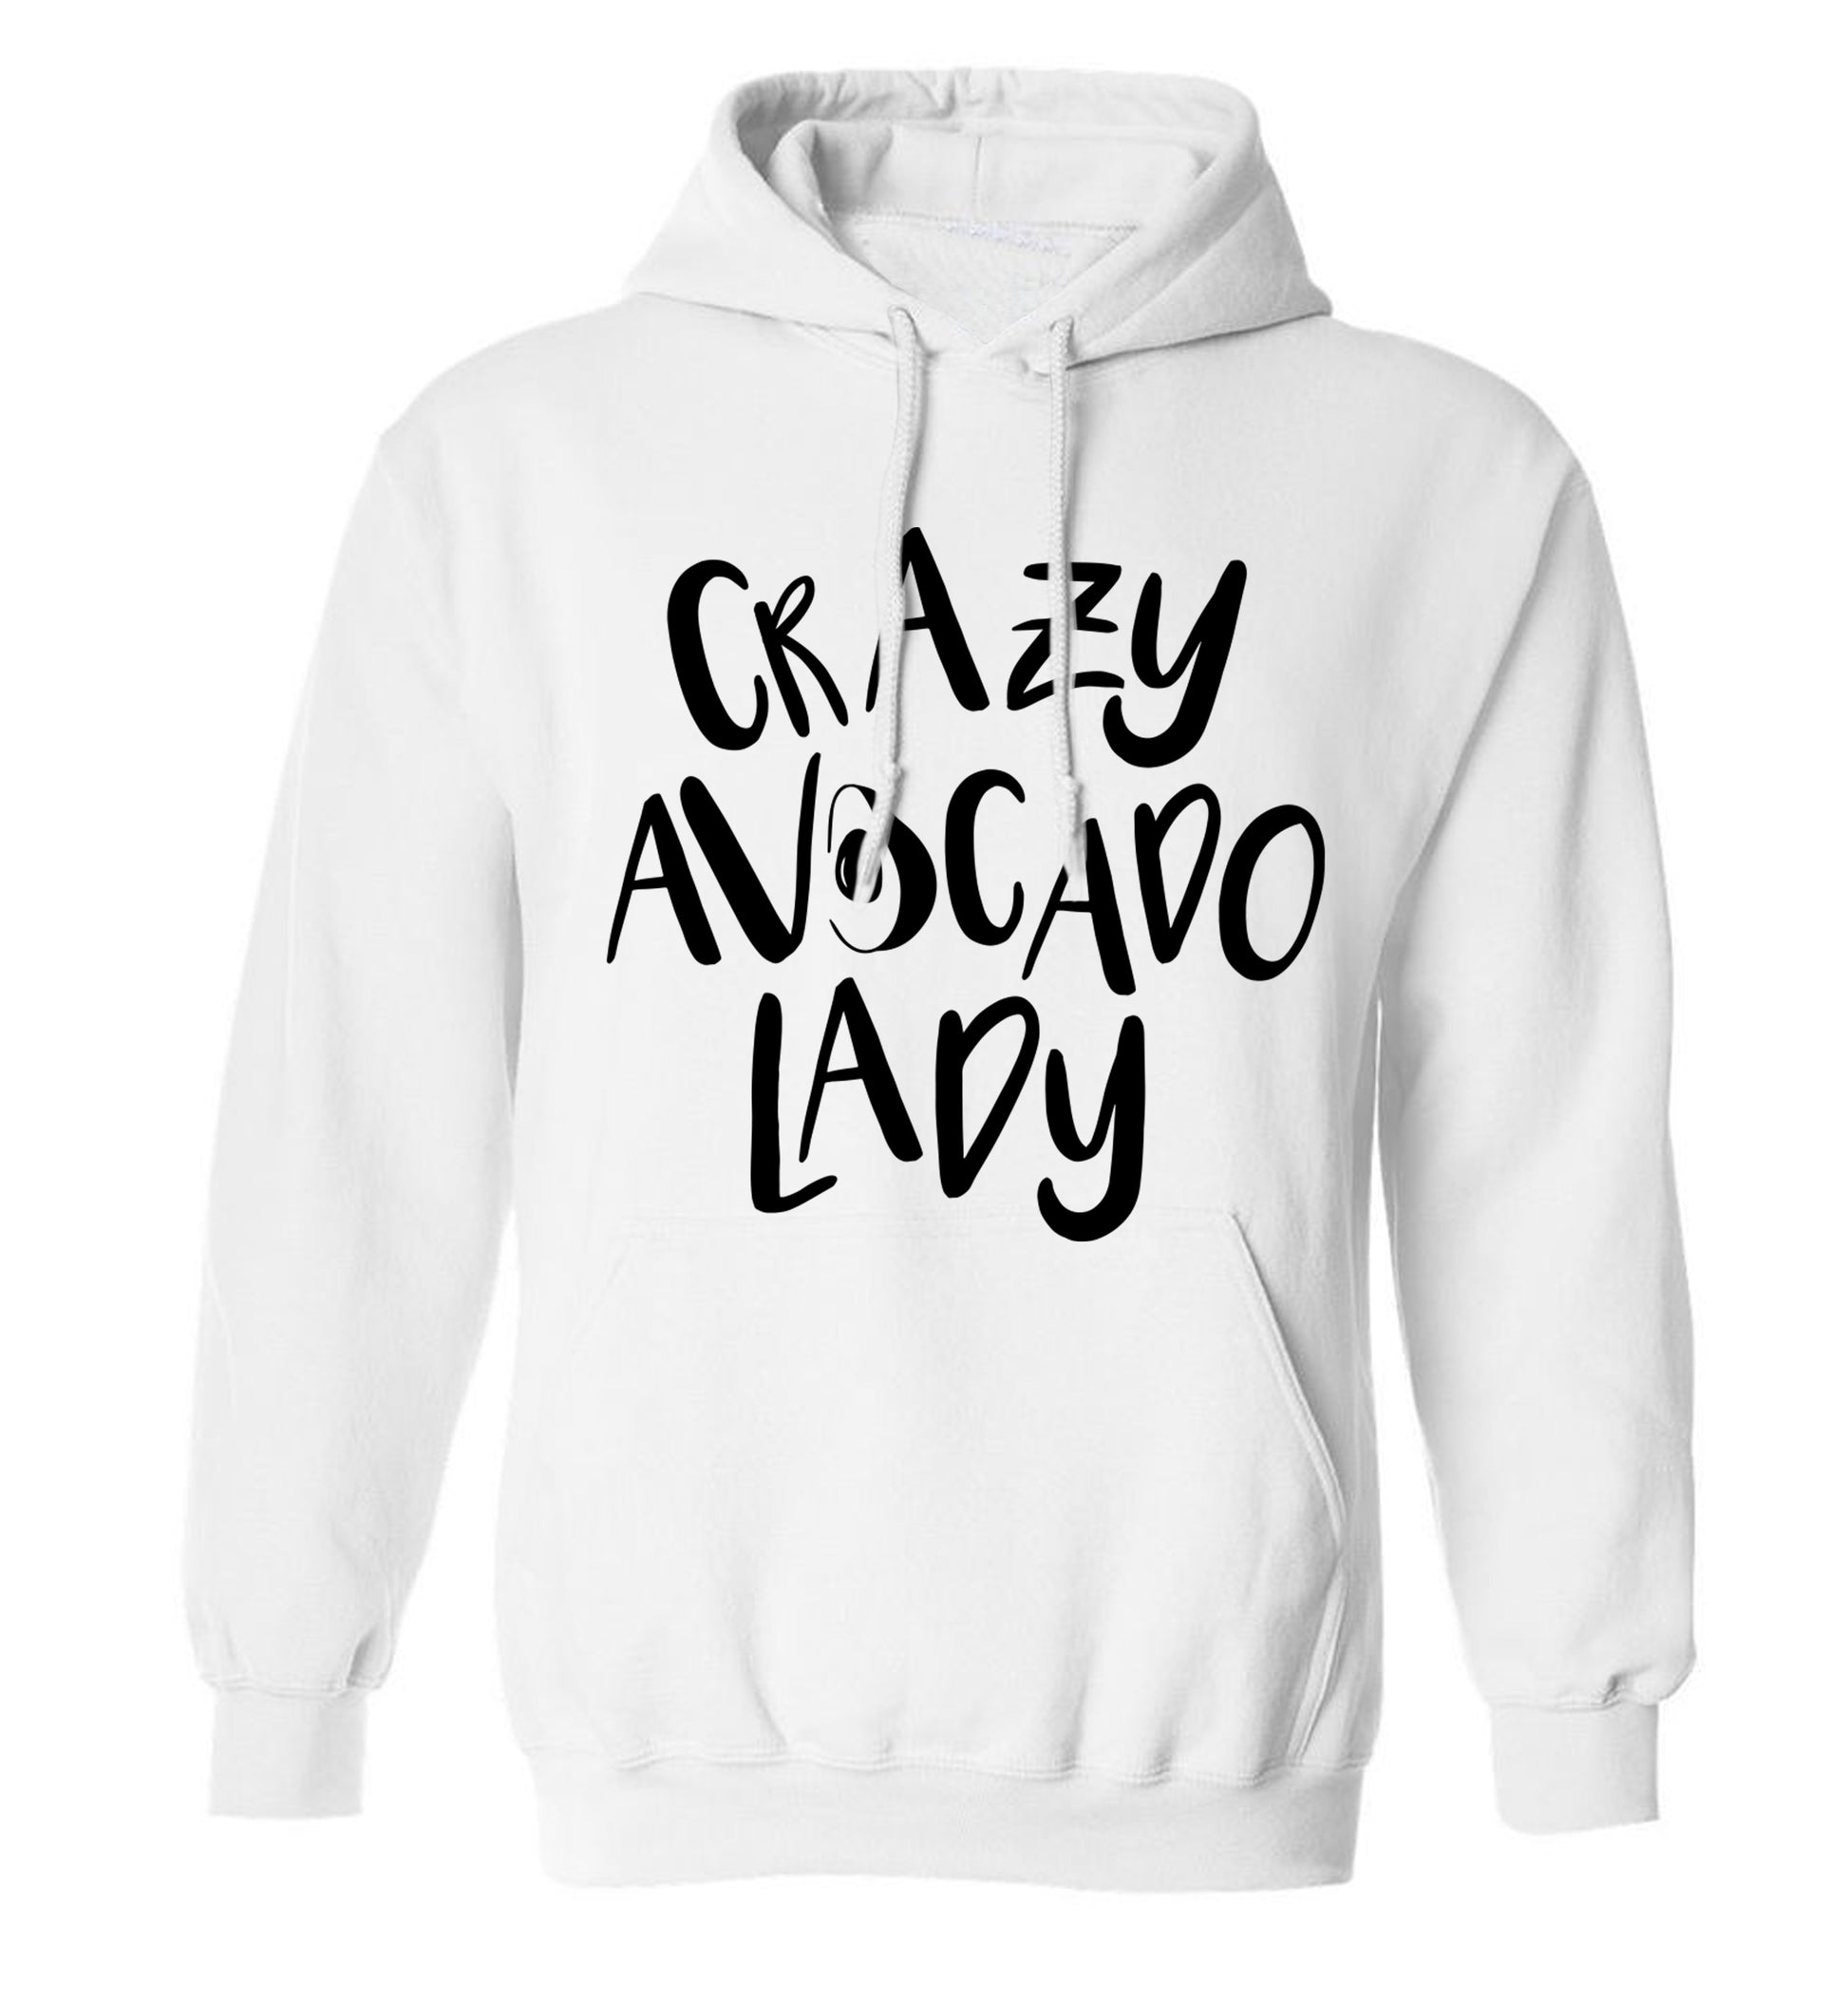 Crazy avocado lady adults unisex white hoodie 2XL